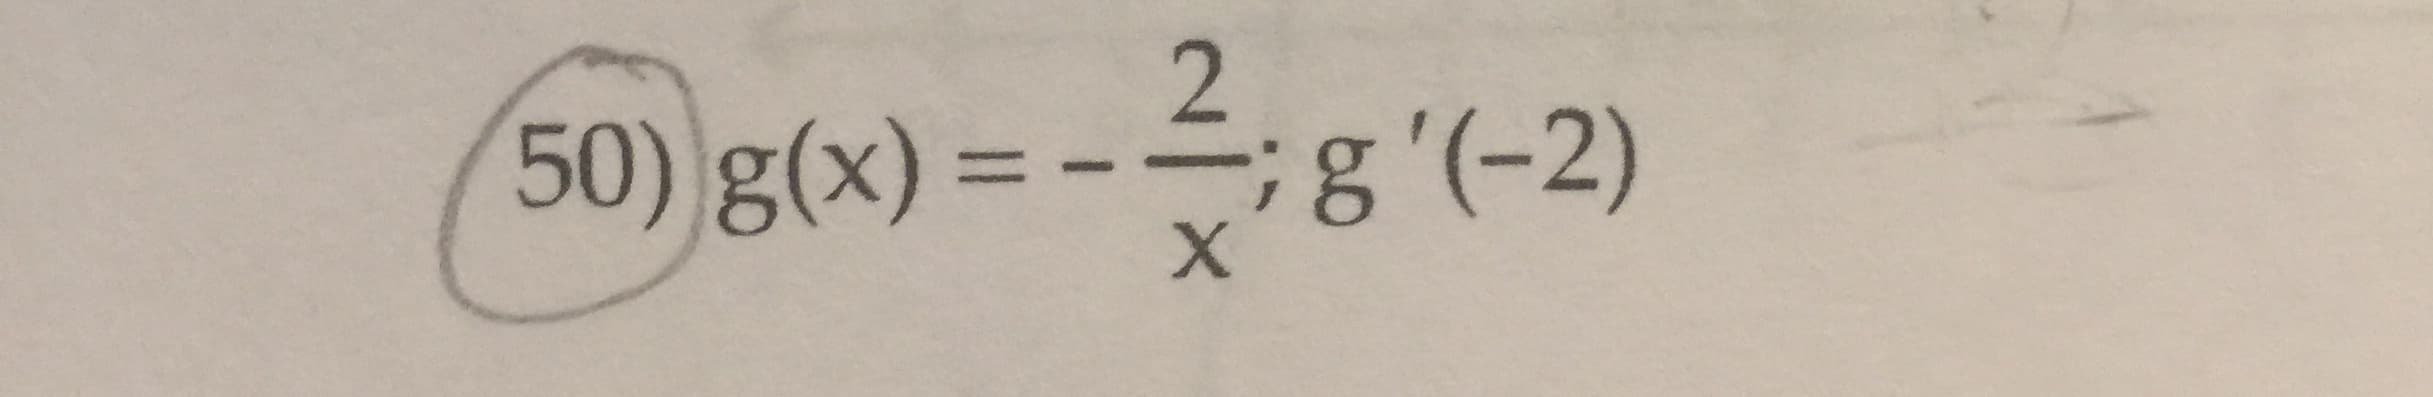 50) g(x) = g -2)
